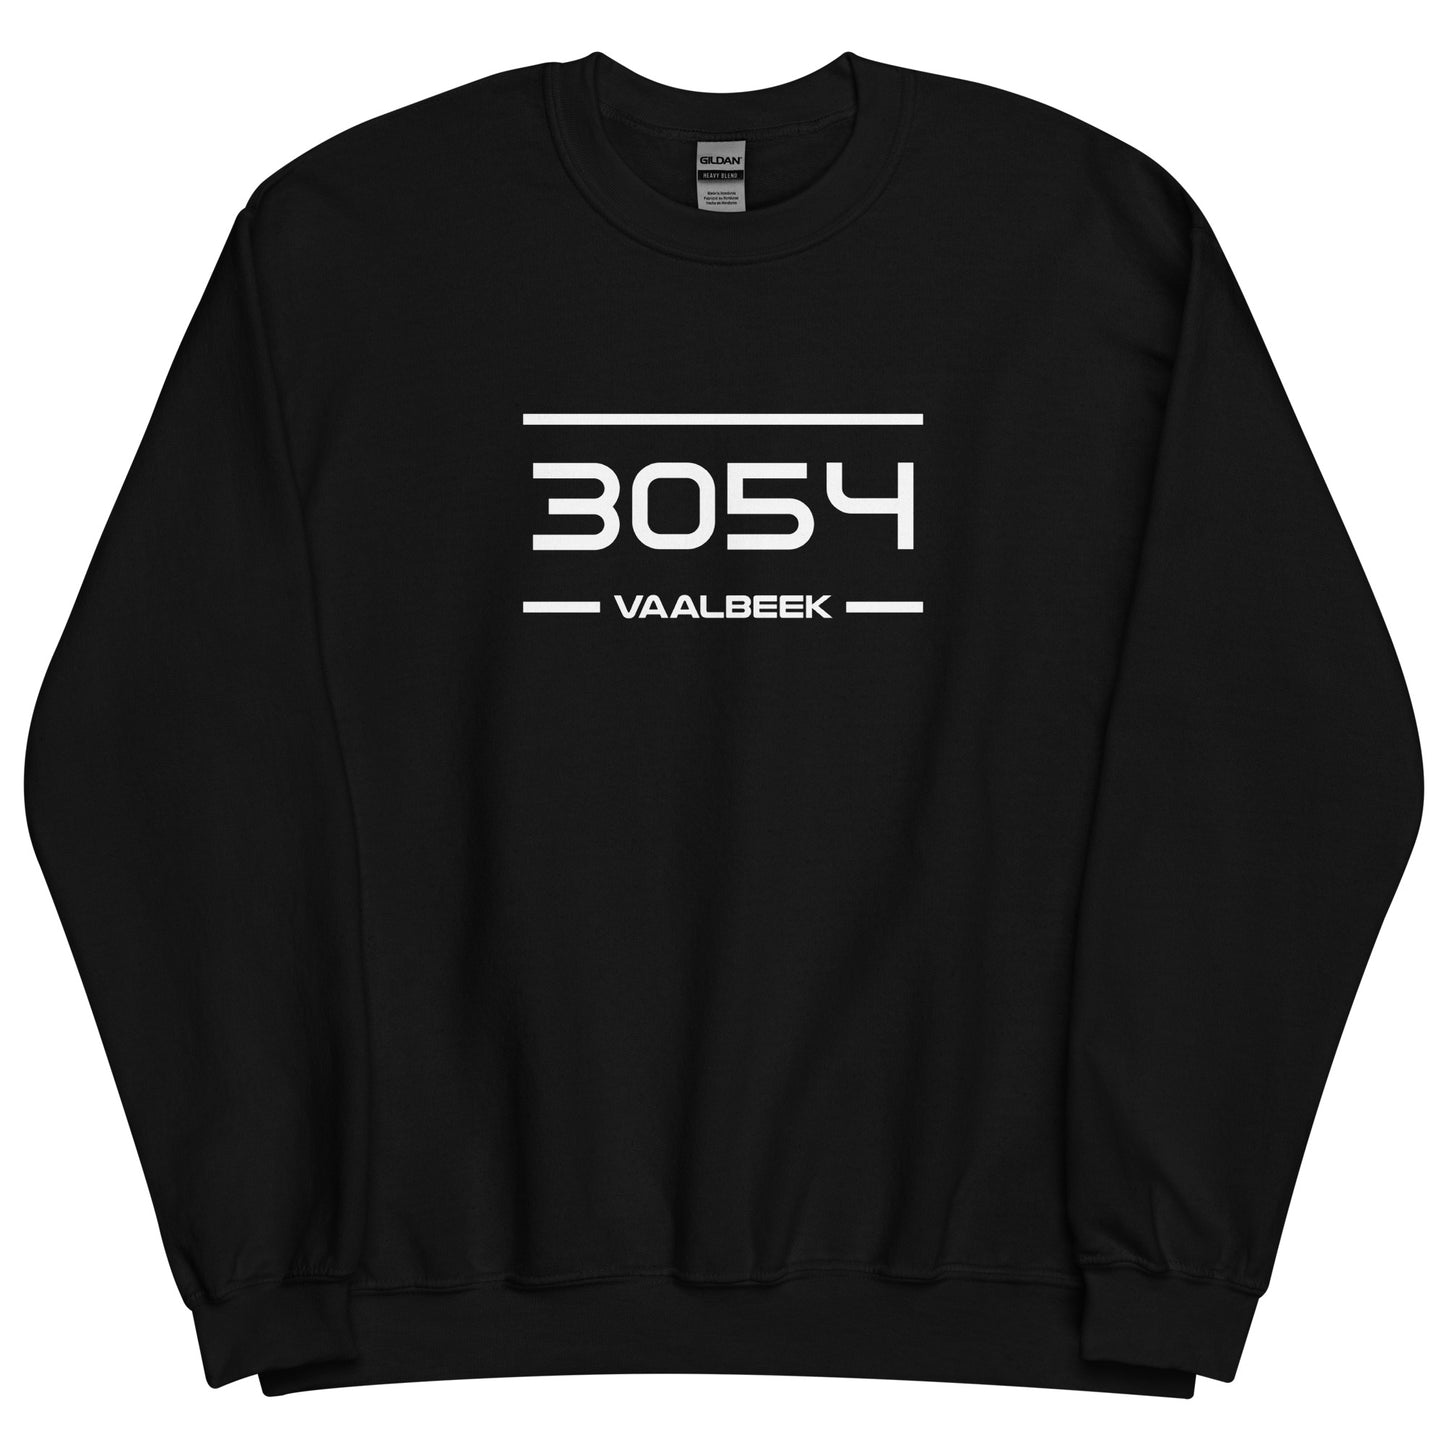 Sweater - 3054 - Vaalbeek (M/V)